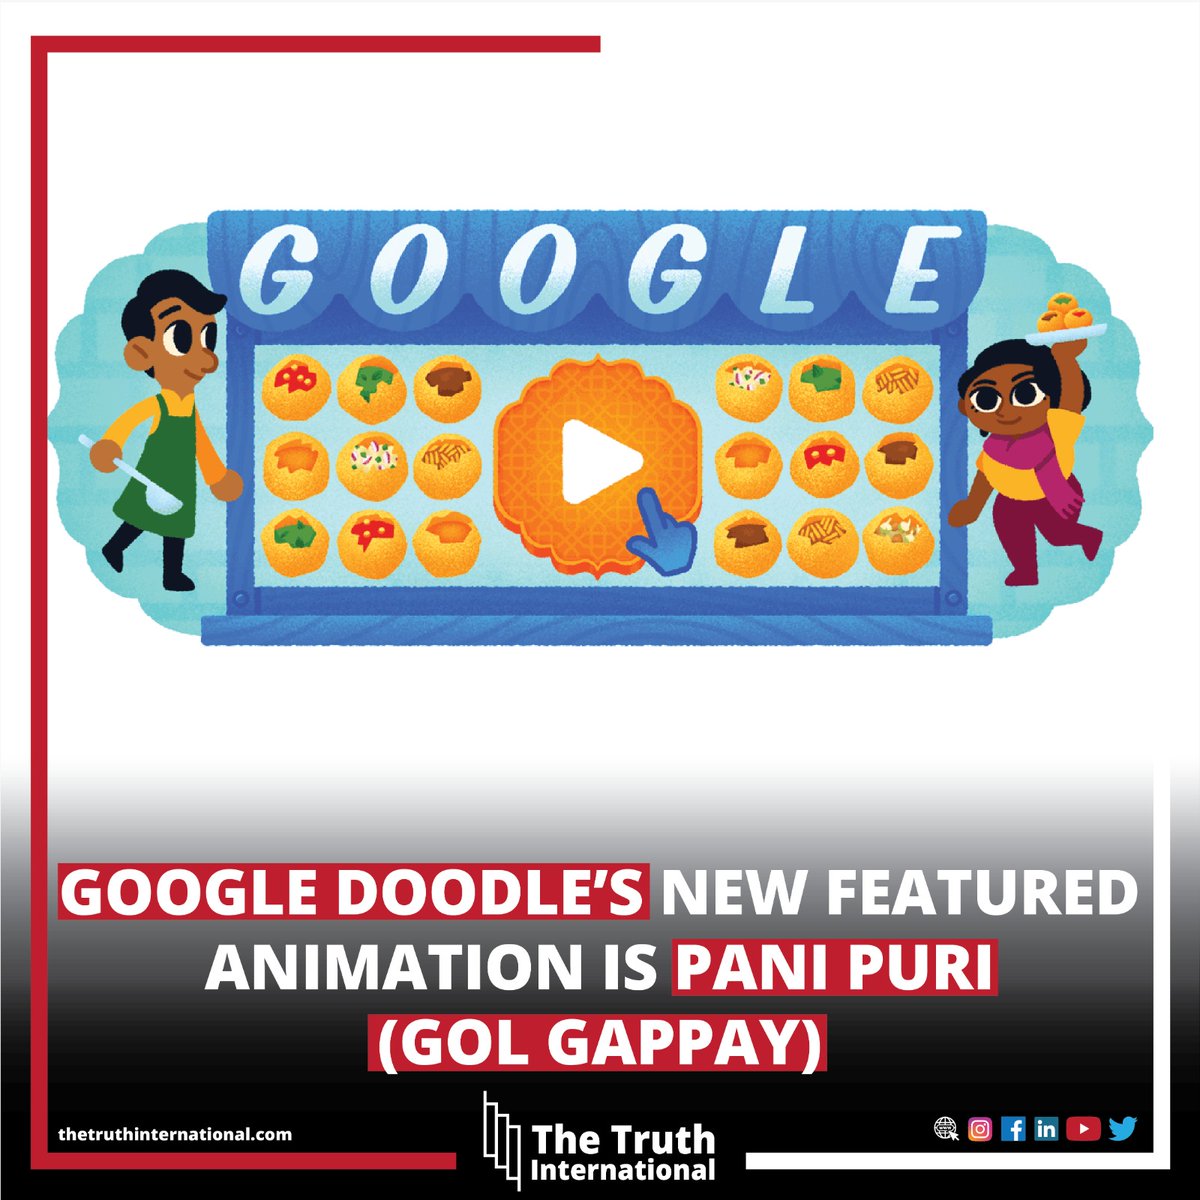 Google Doodle’s New Featured Animation Is Pani Puri (Gol Gappay)

For details:
https://t.co/Yd598oAAHA

#Google #doodle #tti #thetruthinternational #ttimagazine #tti https://t.co/GdEA0g0q4p